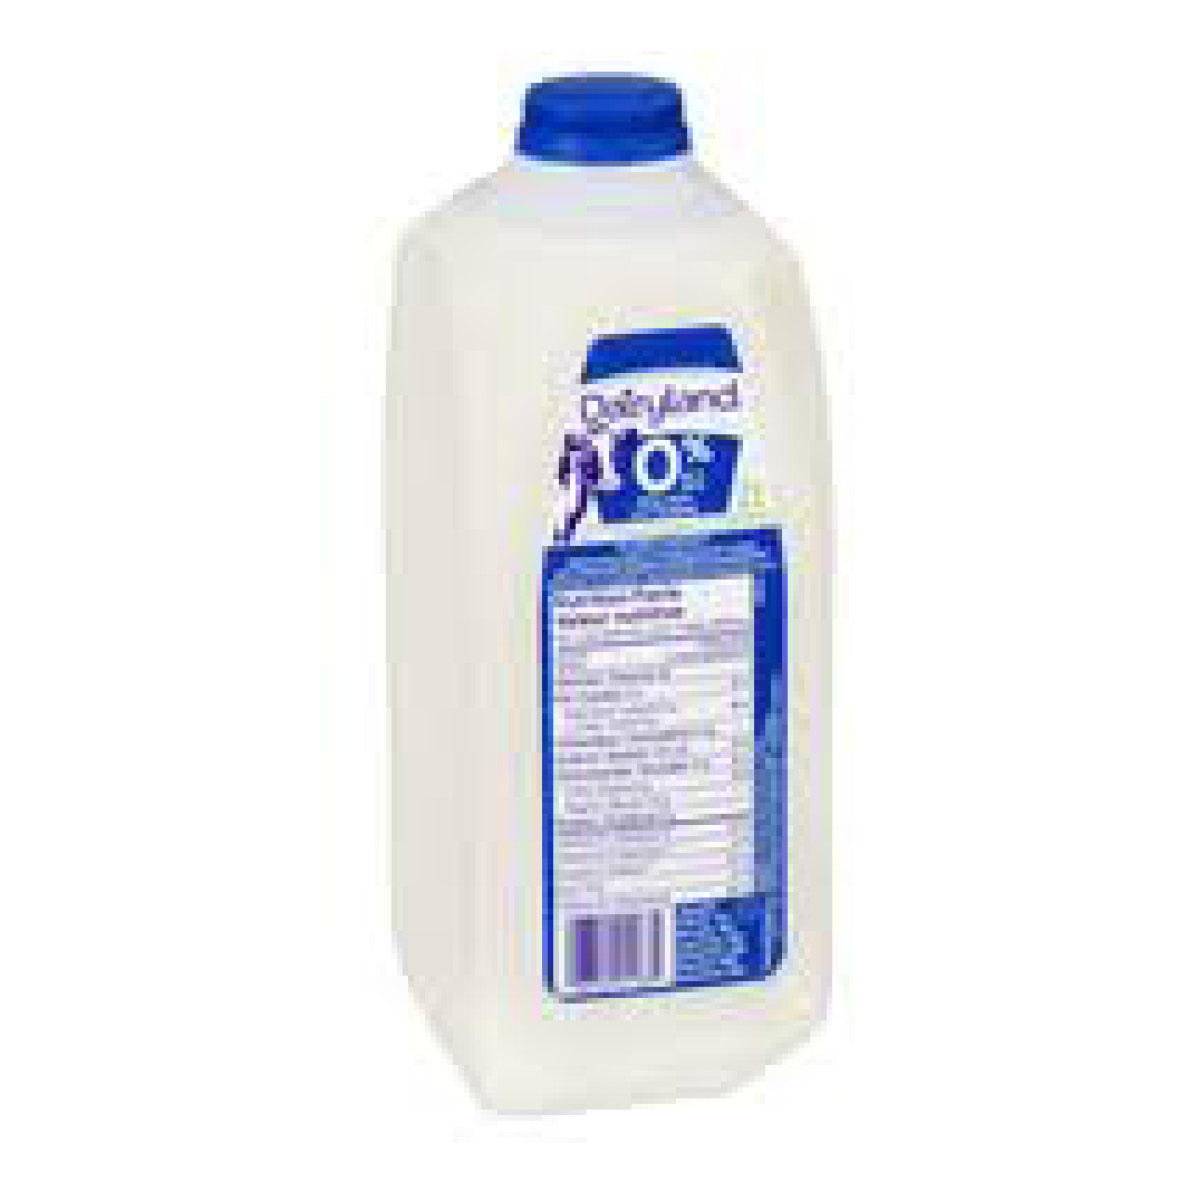 Dairyland 0% Skim Milk, 2L